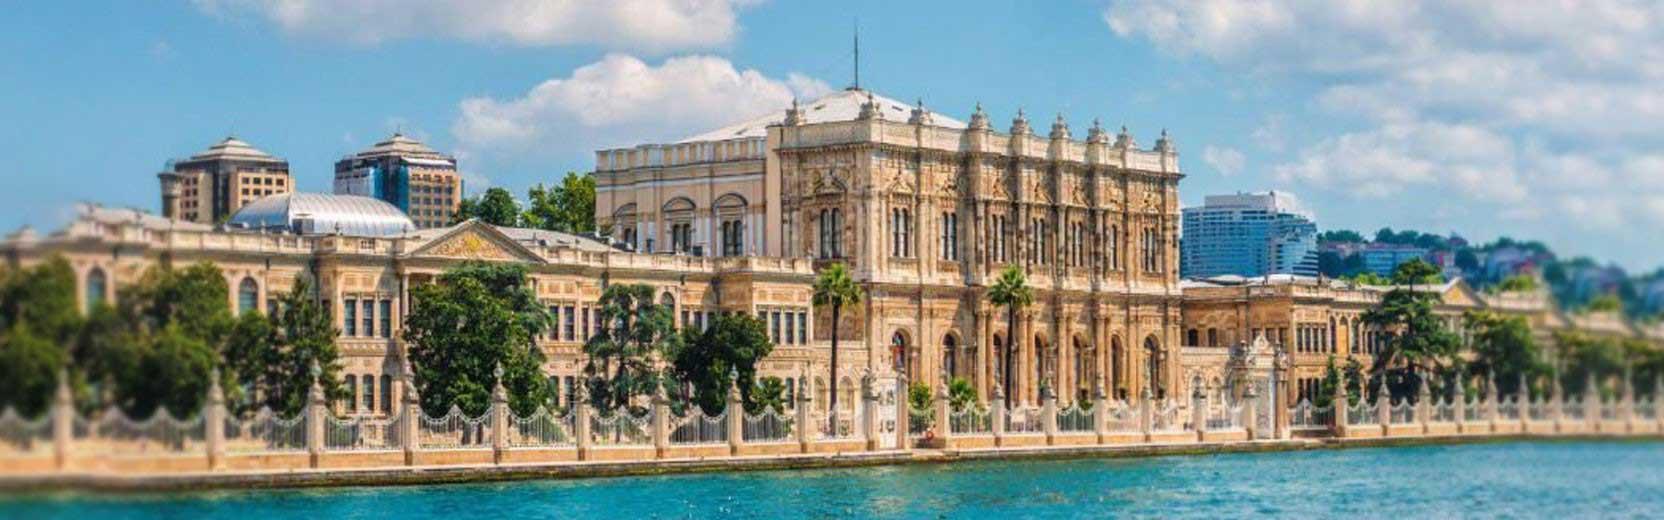 کاخ دلماباغچه استانبول Dolmabahce Palace Istanbul